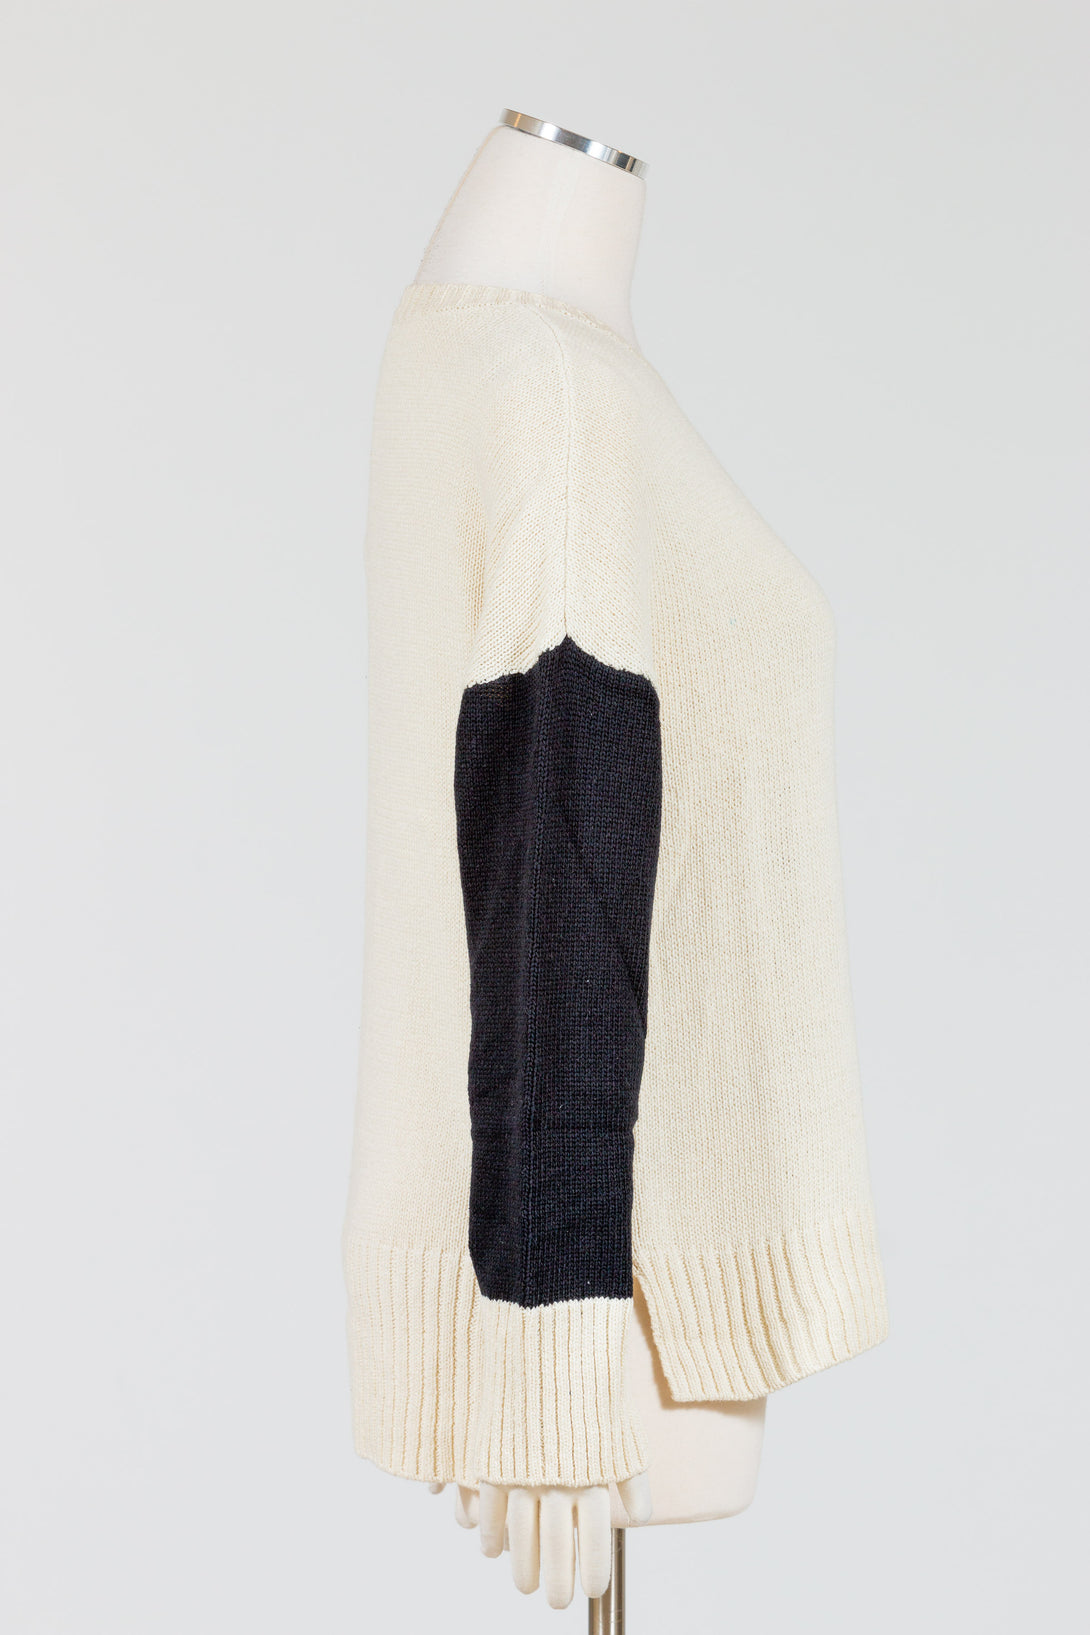 Habitat-Yin-Yang-Pullover-Sweater-Black-White